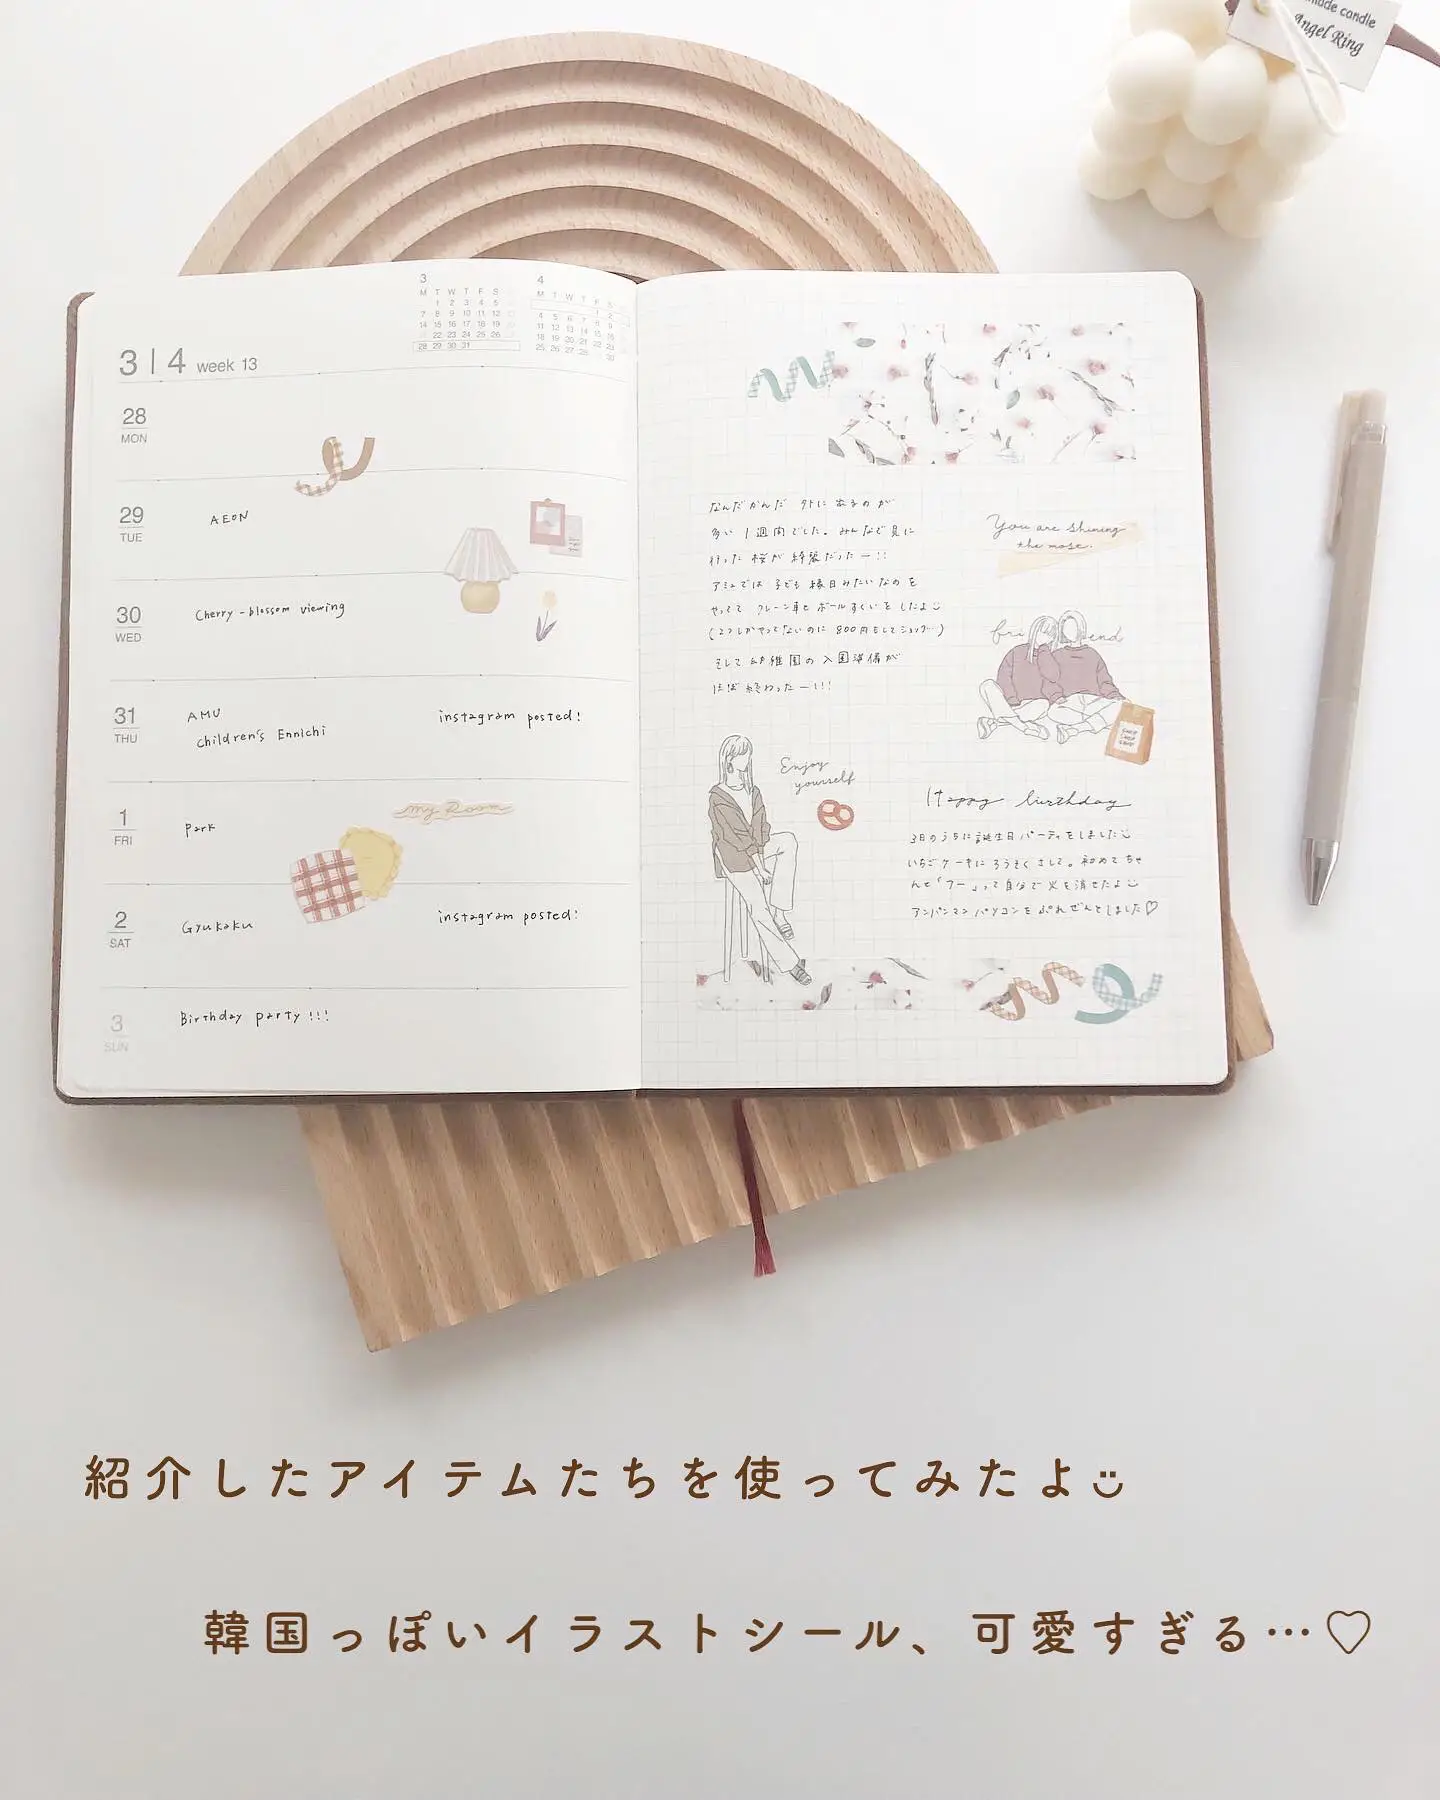 Korean stationery haul: 17 cute notebooks and language study